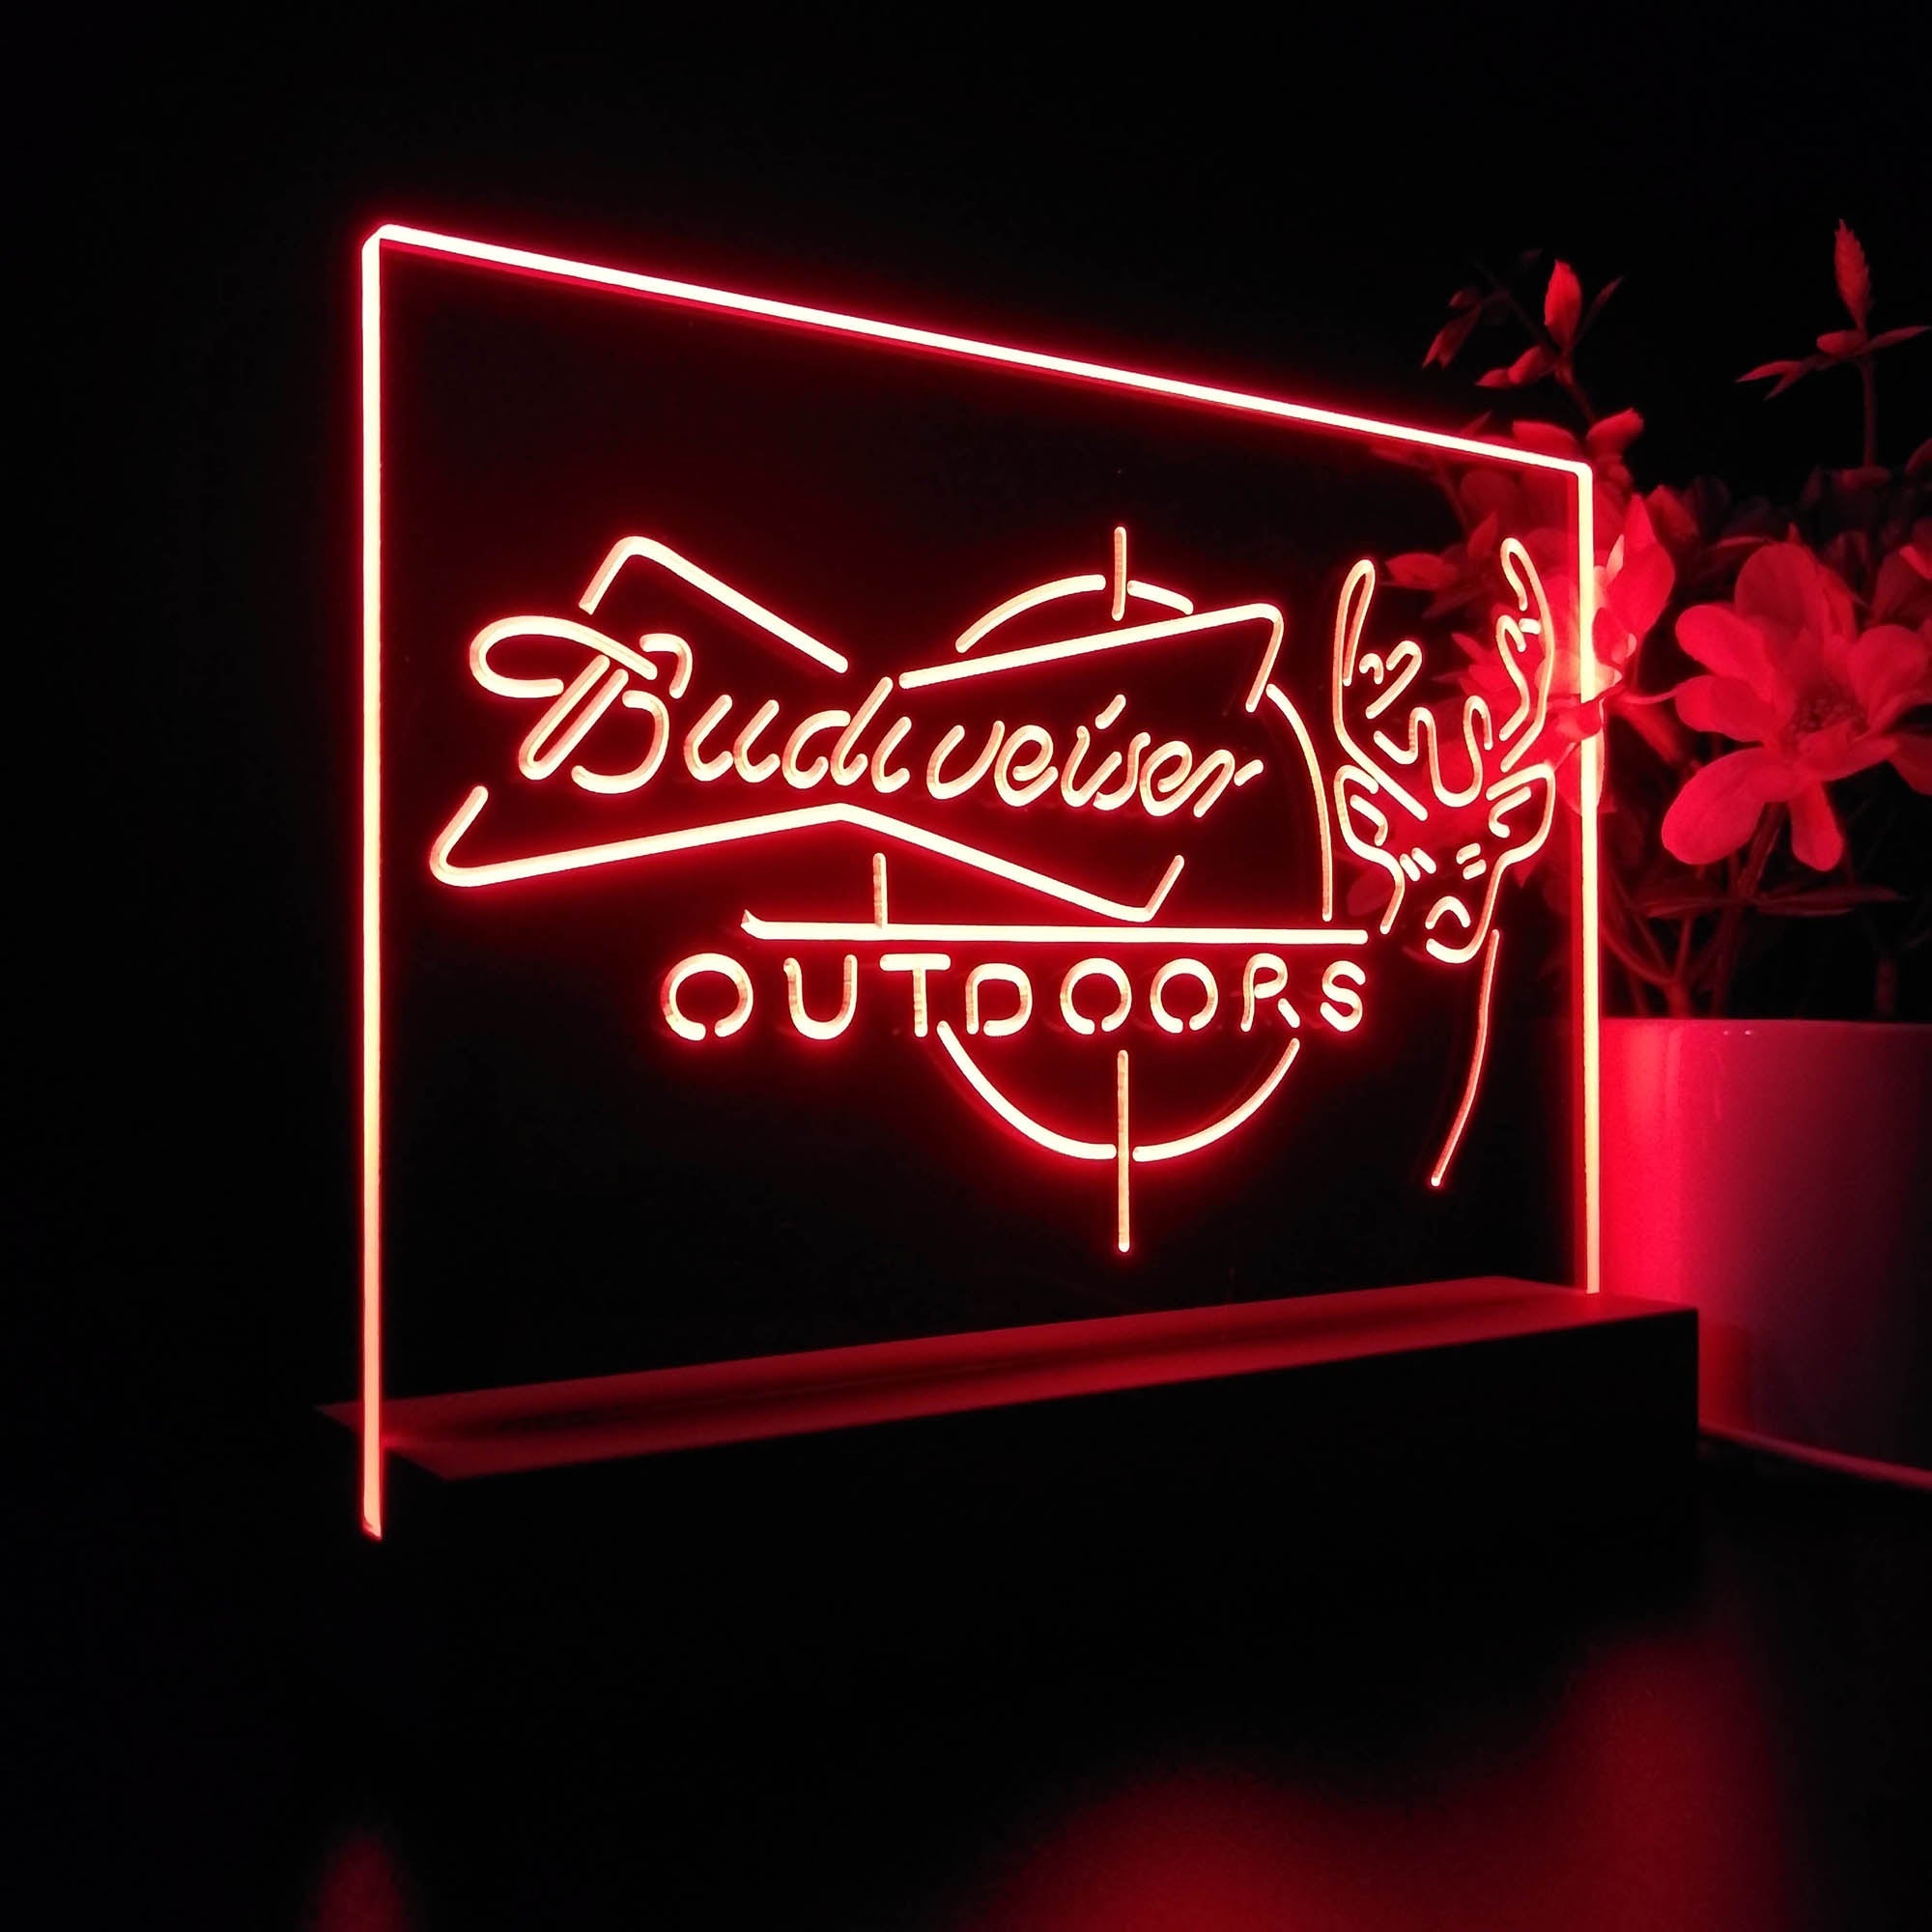 Budweiser Outdoor Hunting Cabin Neon Sign Pub Bar Lamp